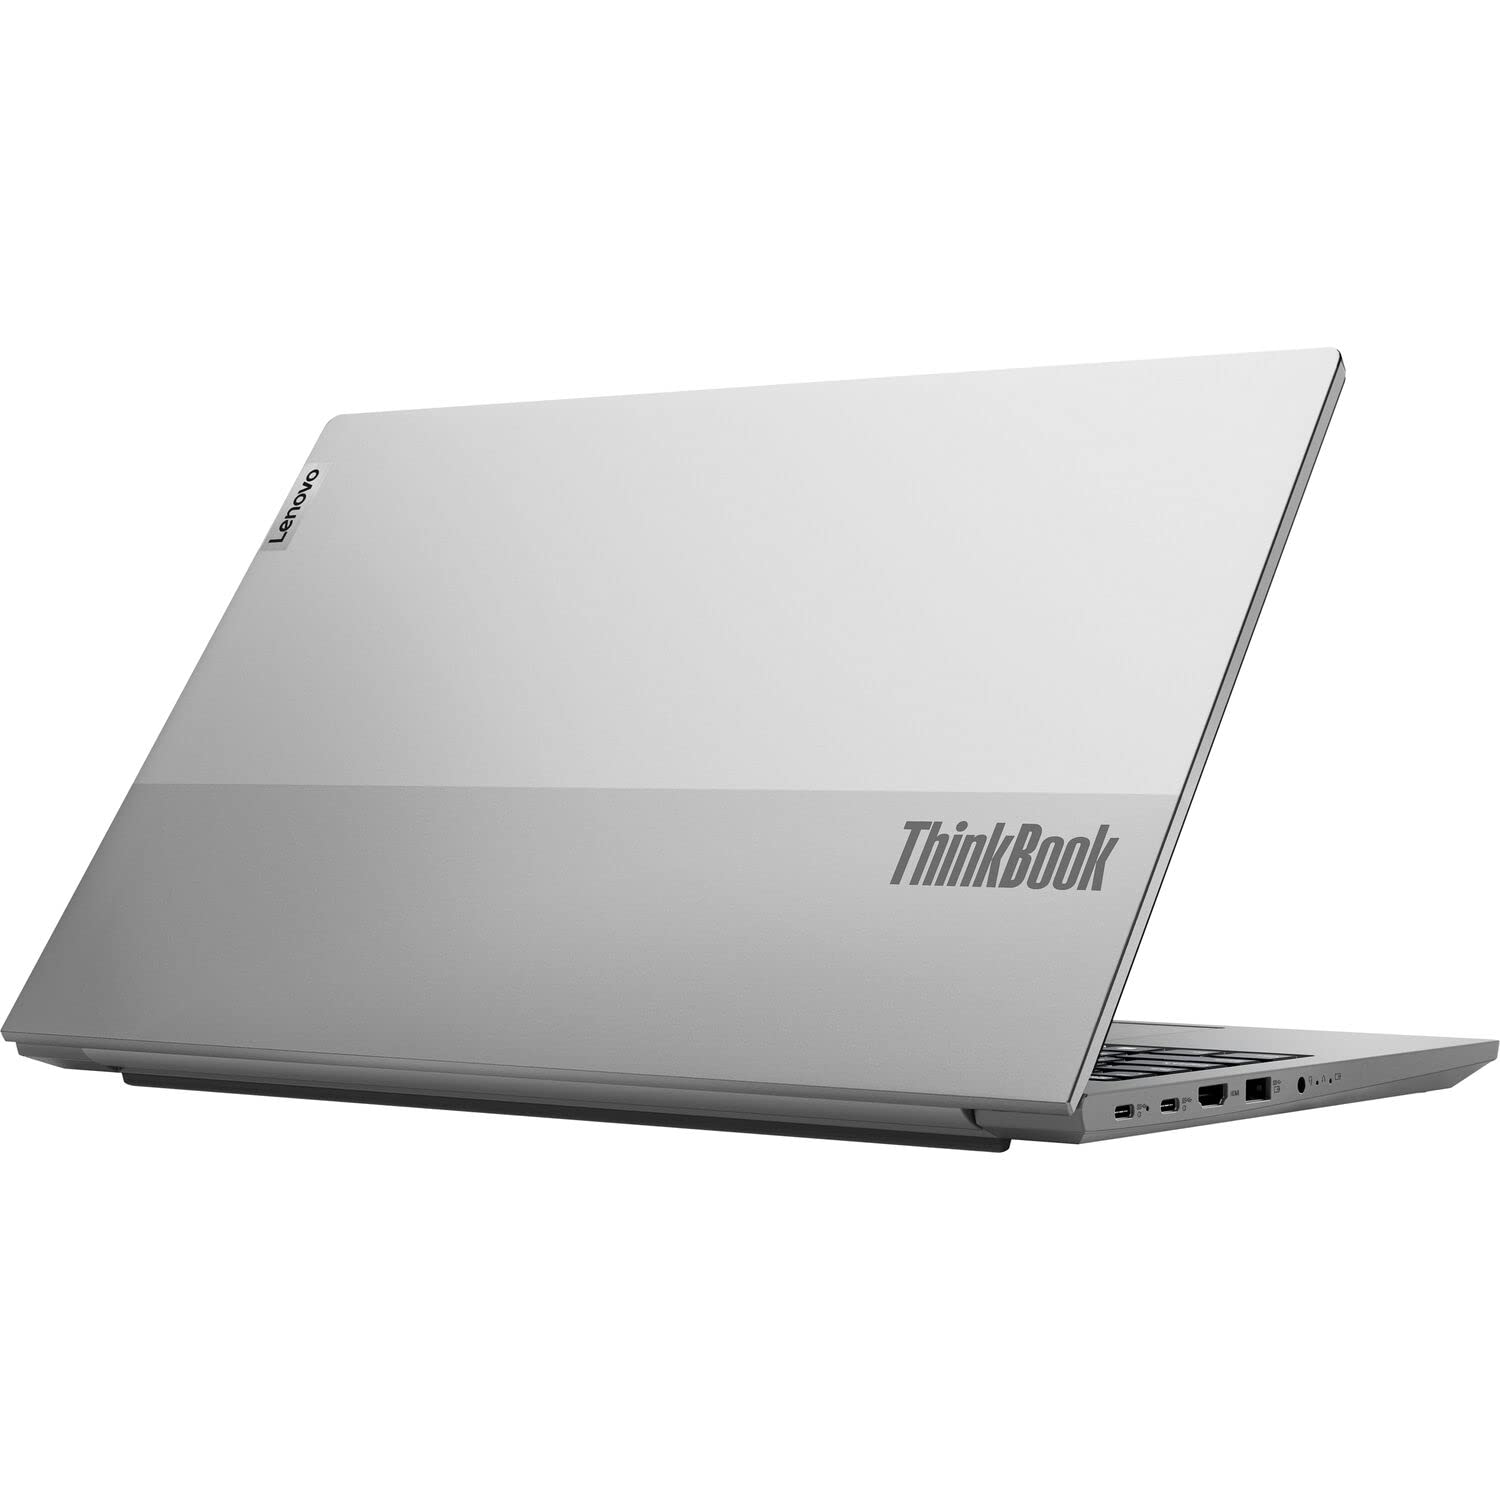 Latest Lenovo ThinkBook 15 Gen 4,15.6" FHD (1920 x 1080) IPS, Anti-Glare, 12th Gen Intel i7-1255U, 512GB SSD, 16GB DDR4, Thunderbolt 4, 1080P Camera, Win 11 Pro - Mineral Grey (Authorized Reseller)